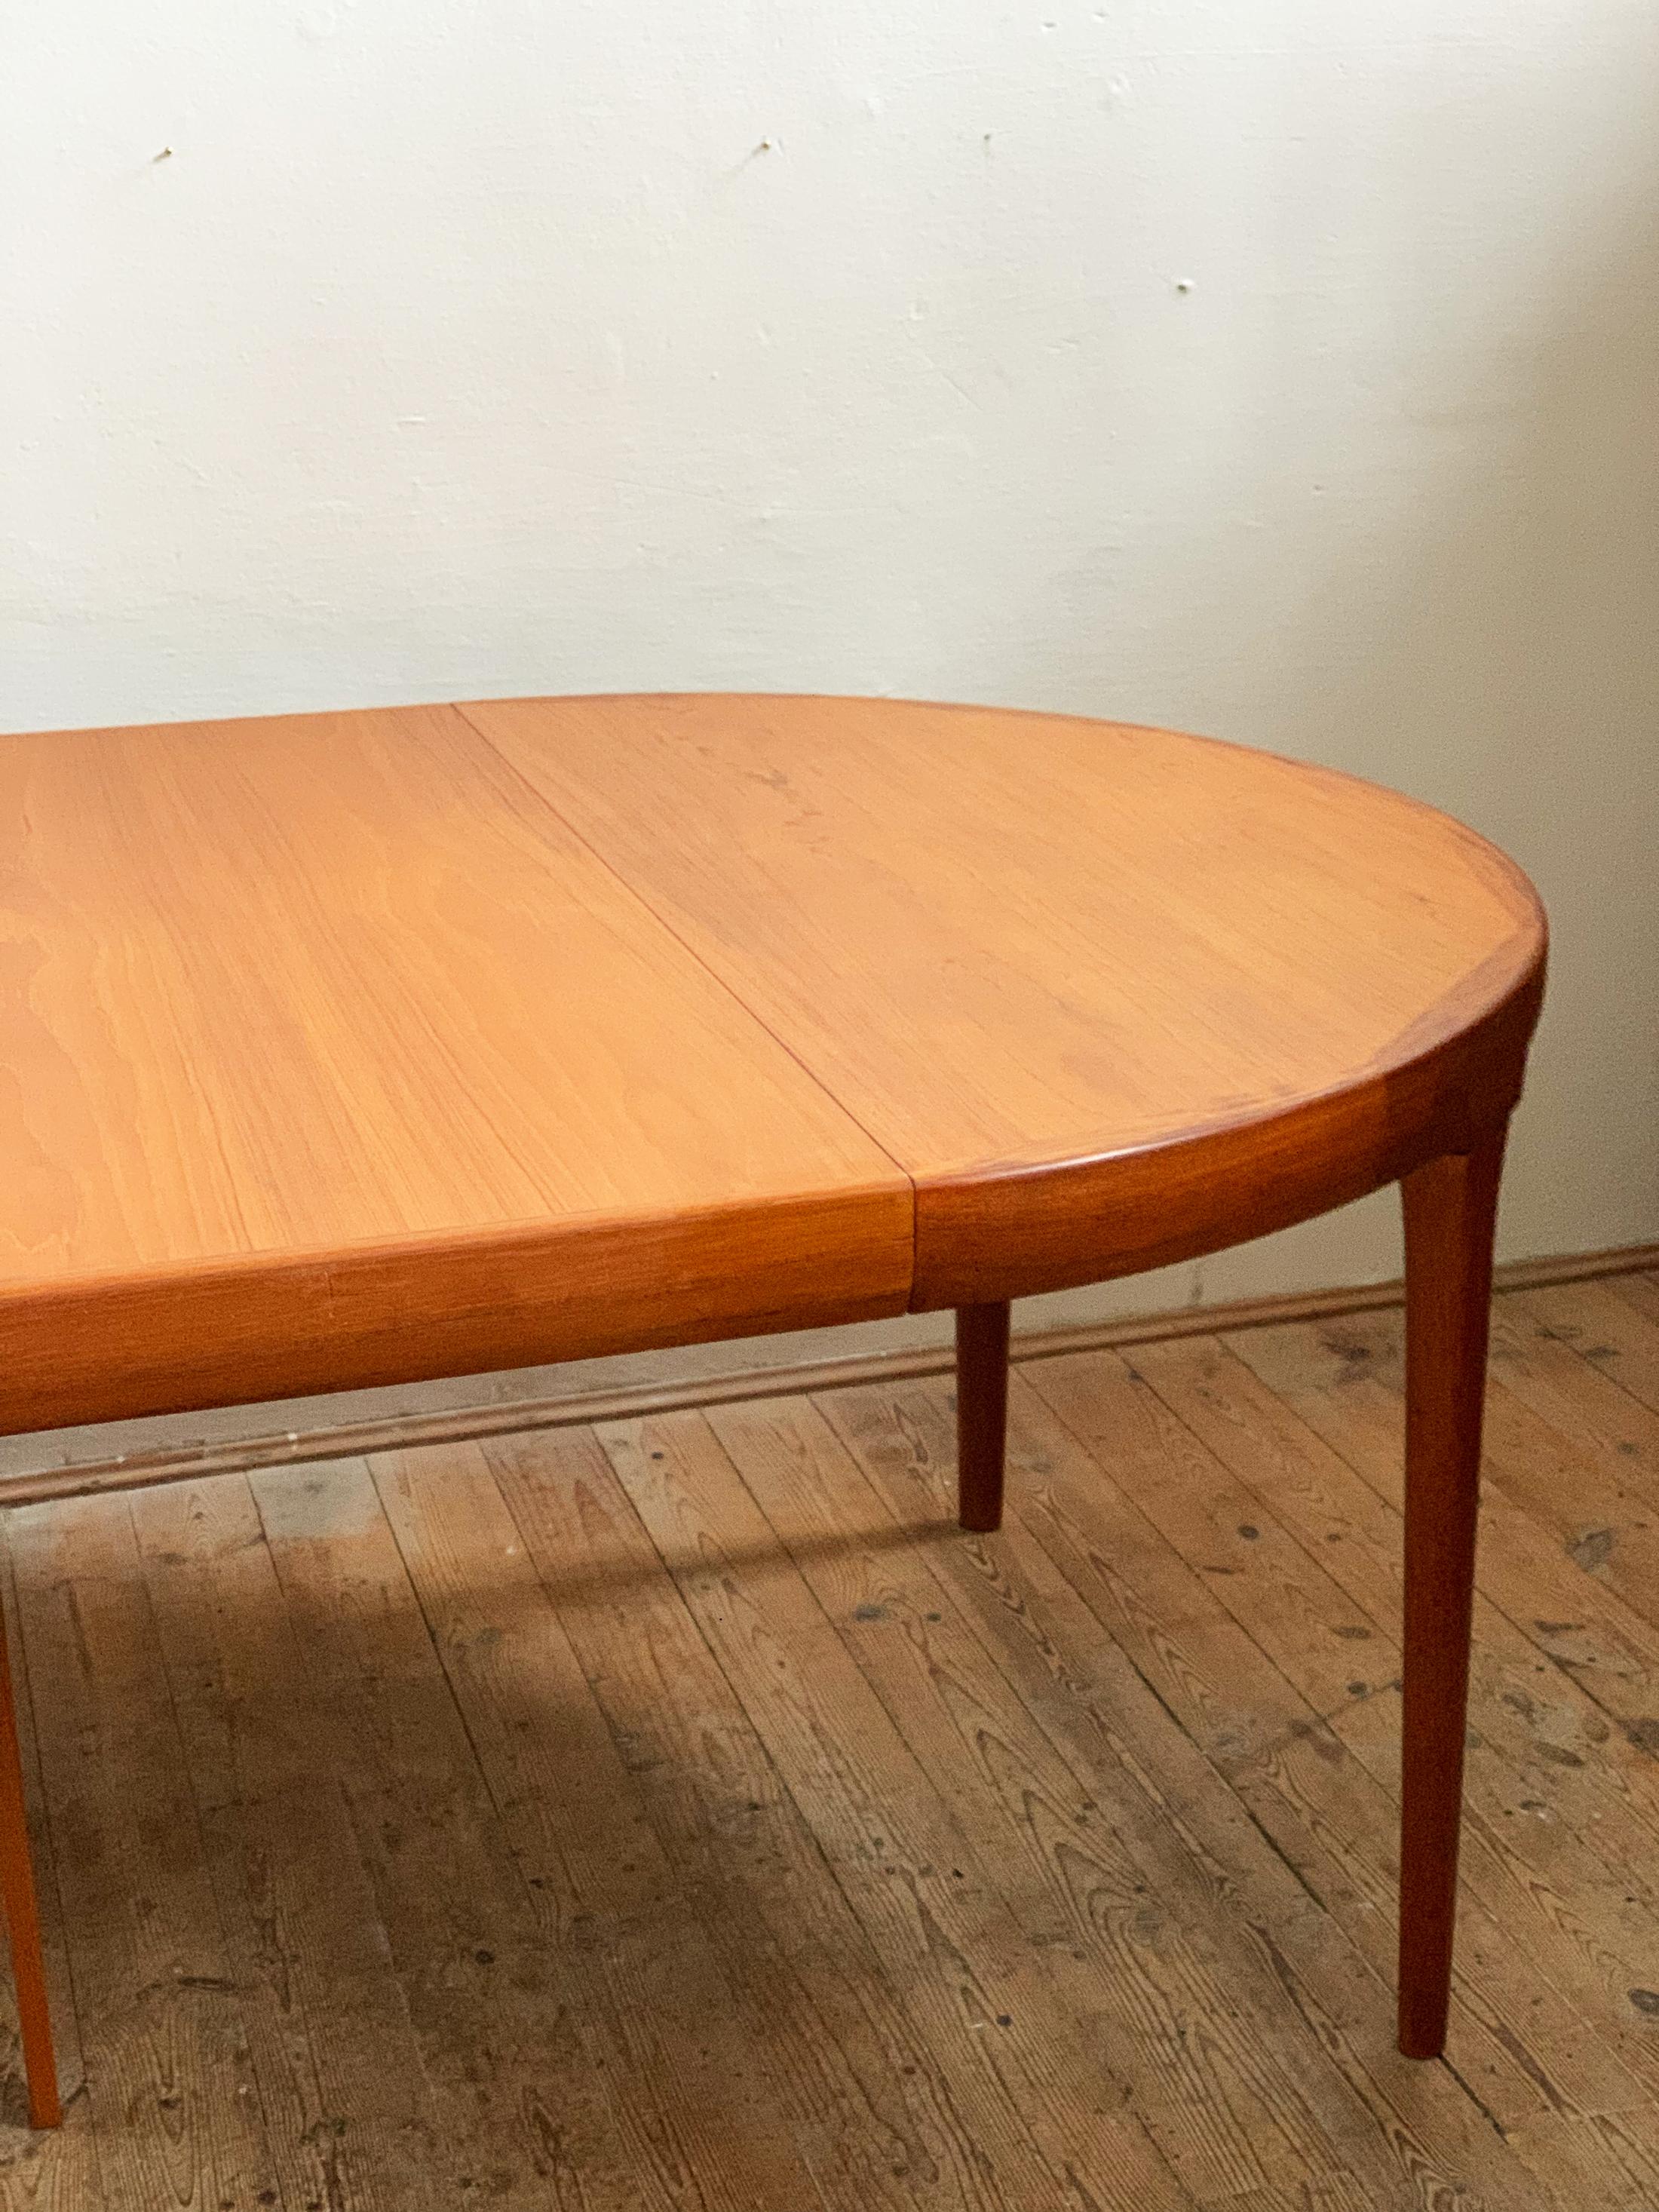 Danish Mid-Century Modern Extendable Teak Dining Table by Ib Kofod-Larsen, 1960s For Sale 12